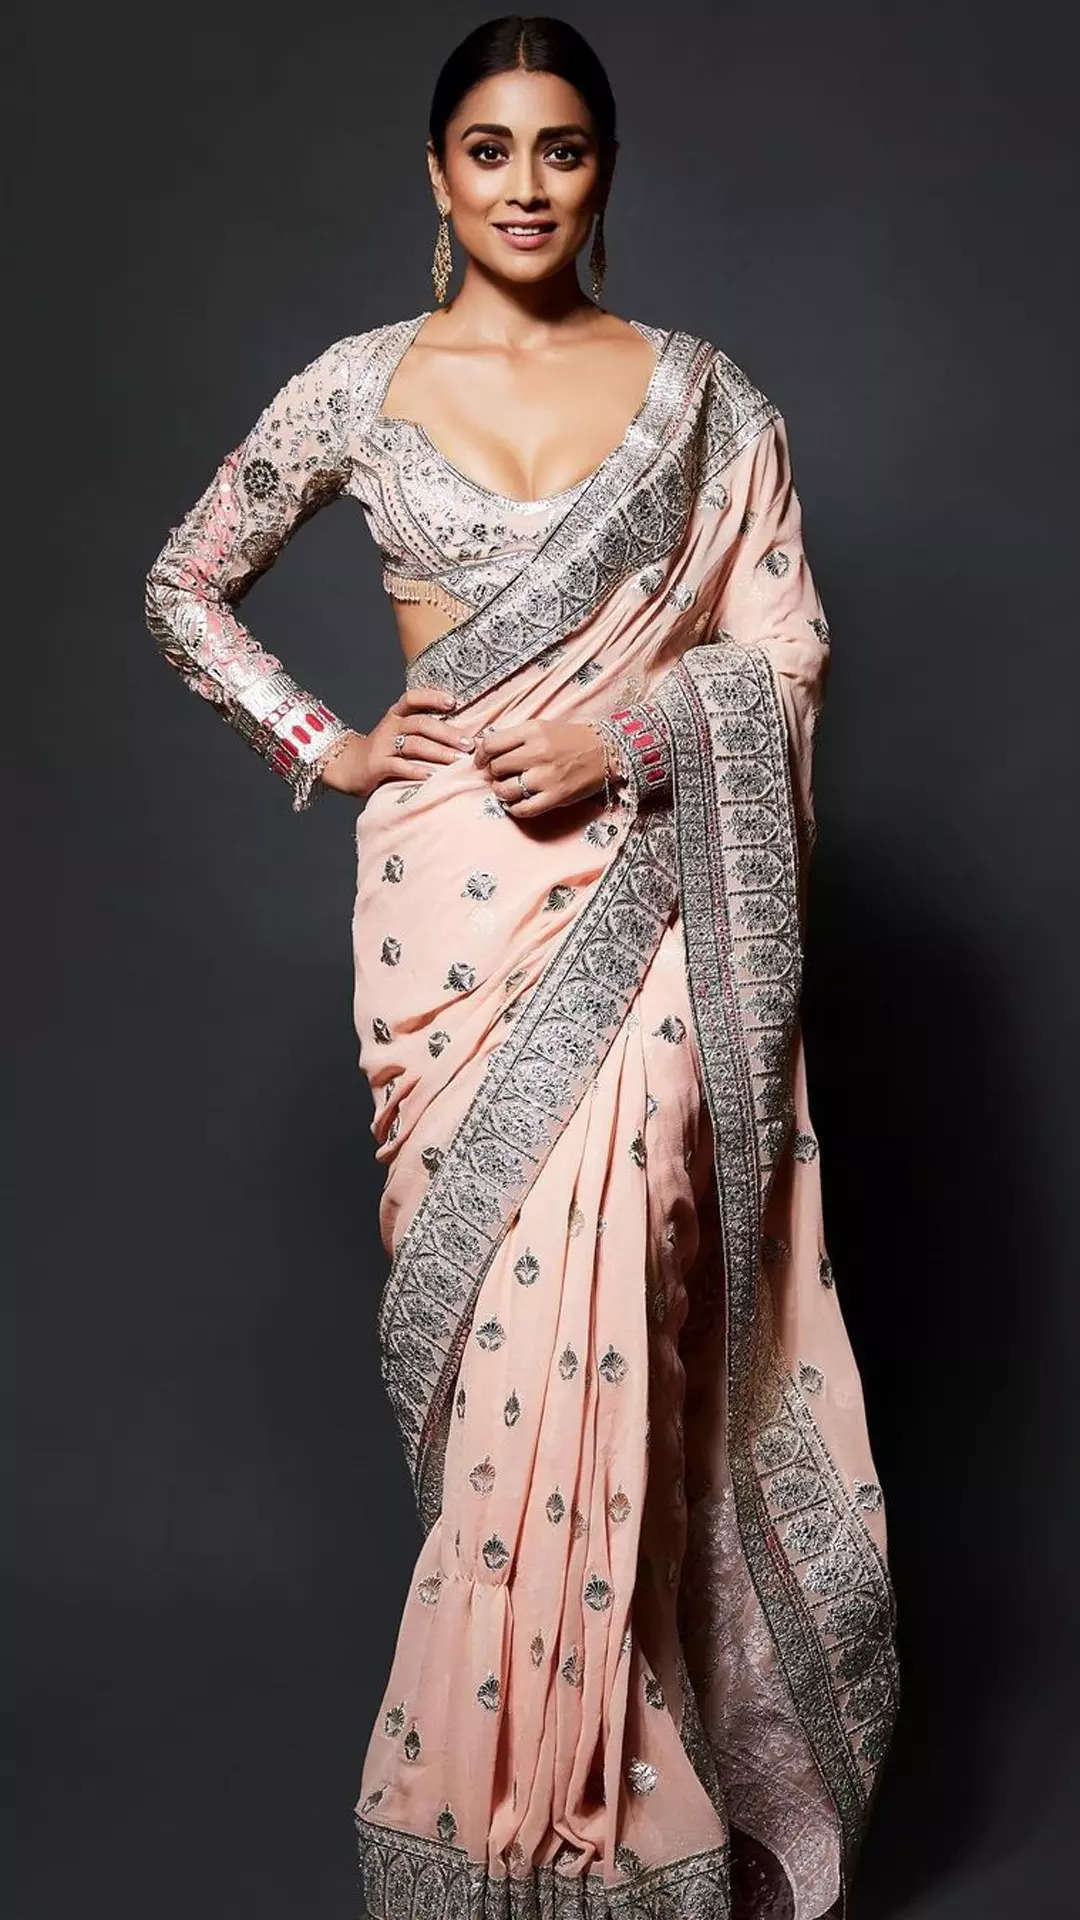 Shriya Saran gives us ethnic inspiration in Indo-Western blouse designs